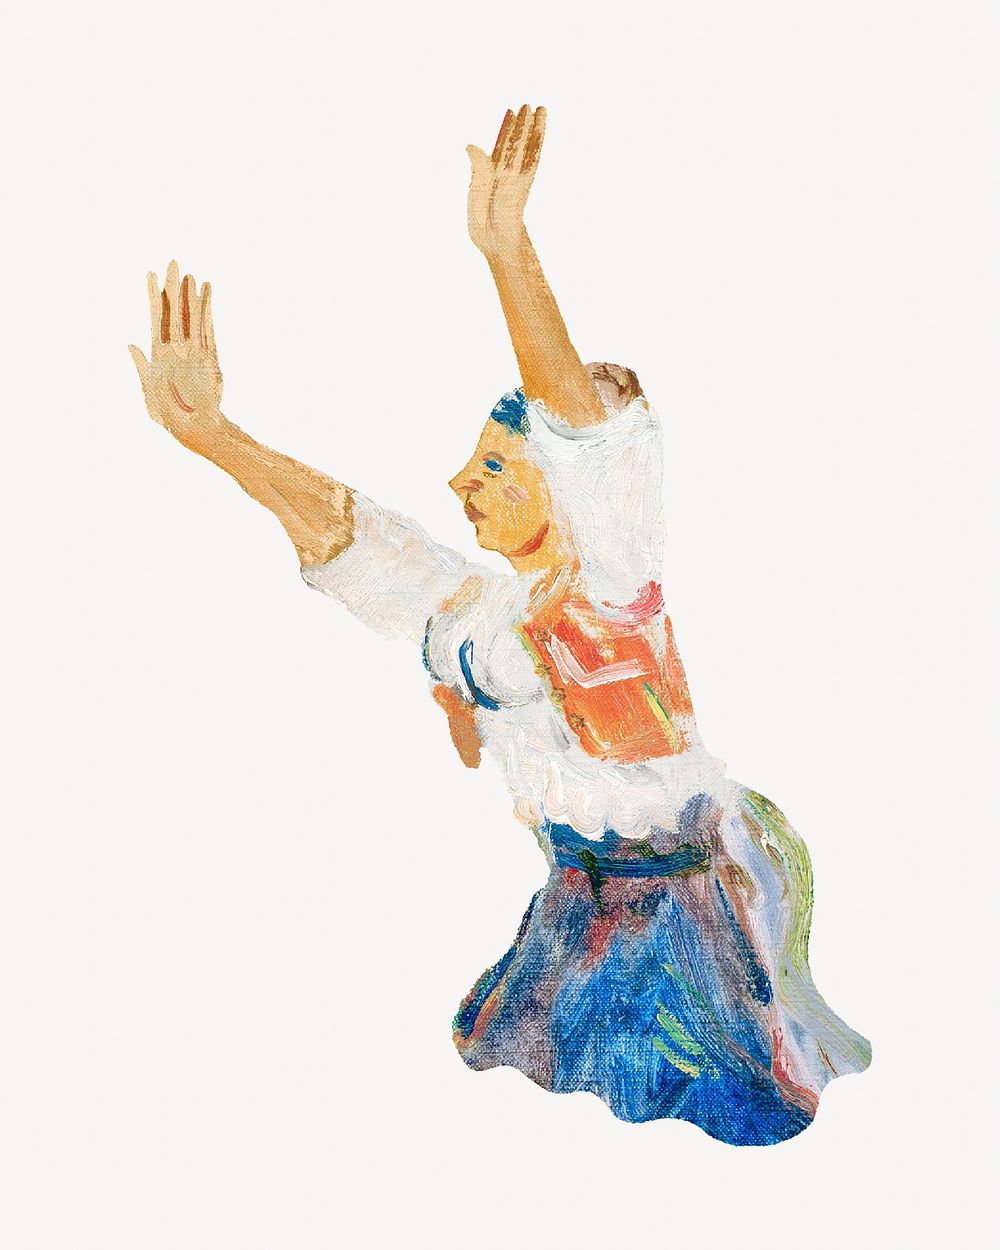 Praying woman, vintage illustration by Cyprian Majernik. Remixed by rawpixel.